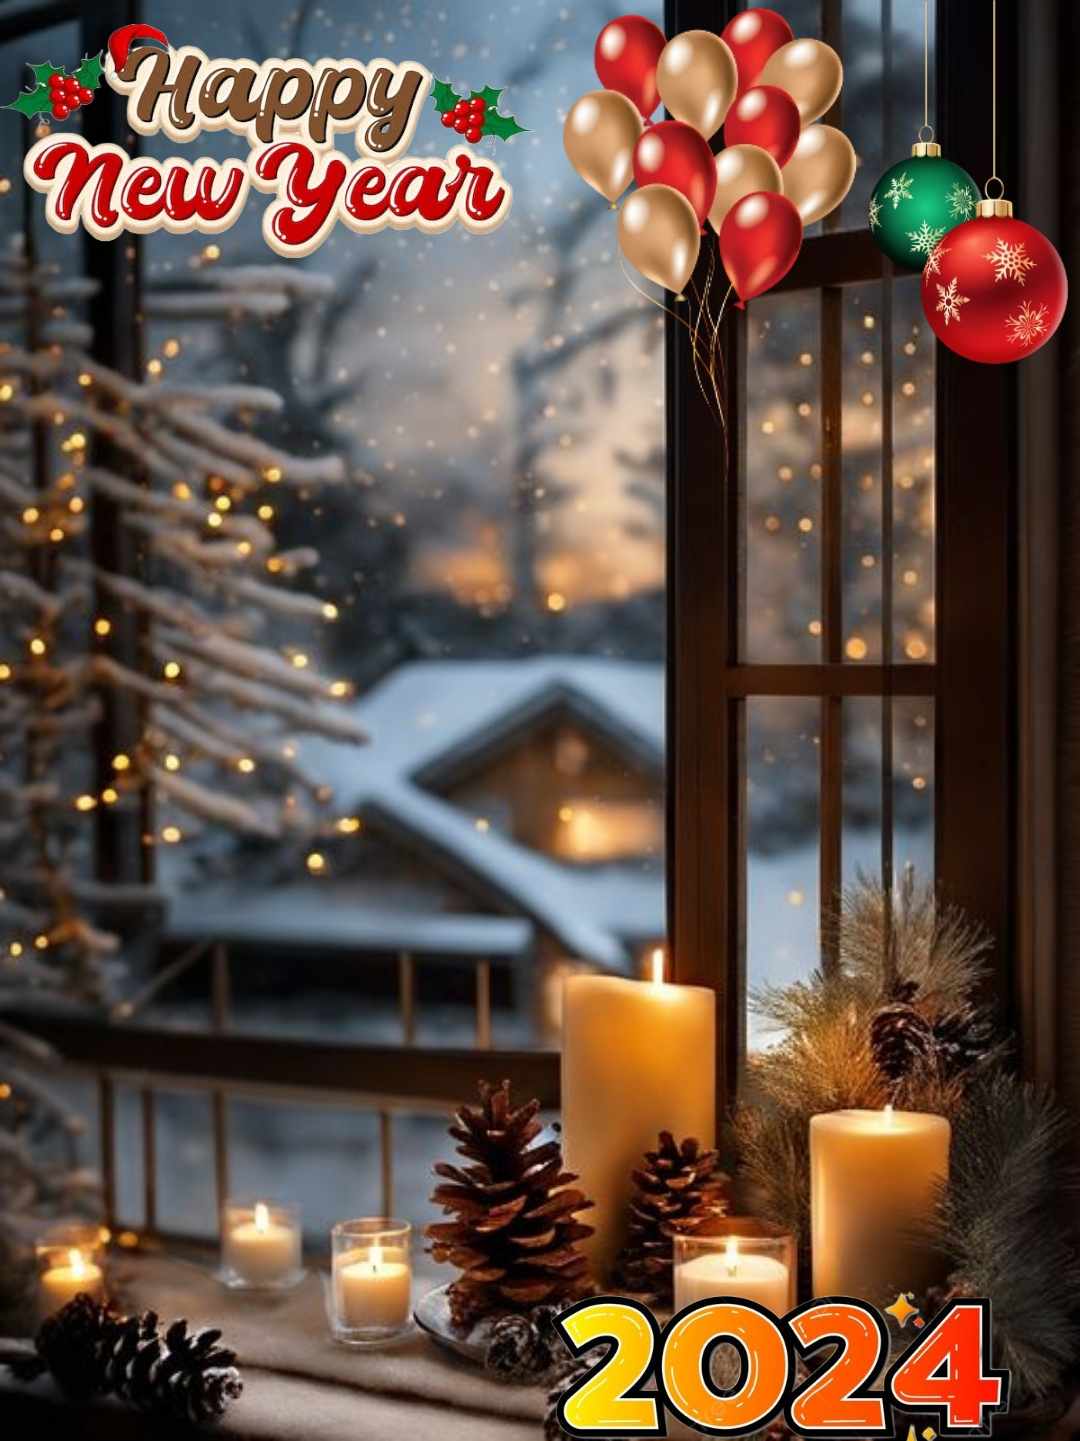 Happy New Year 2024 Full HD Image